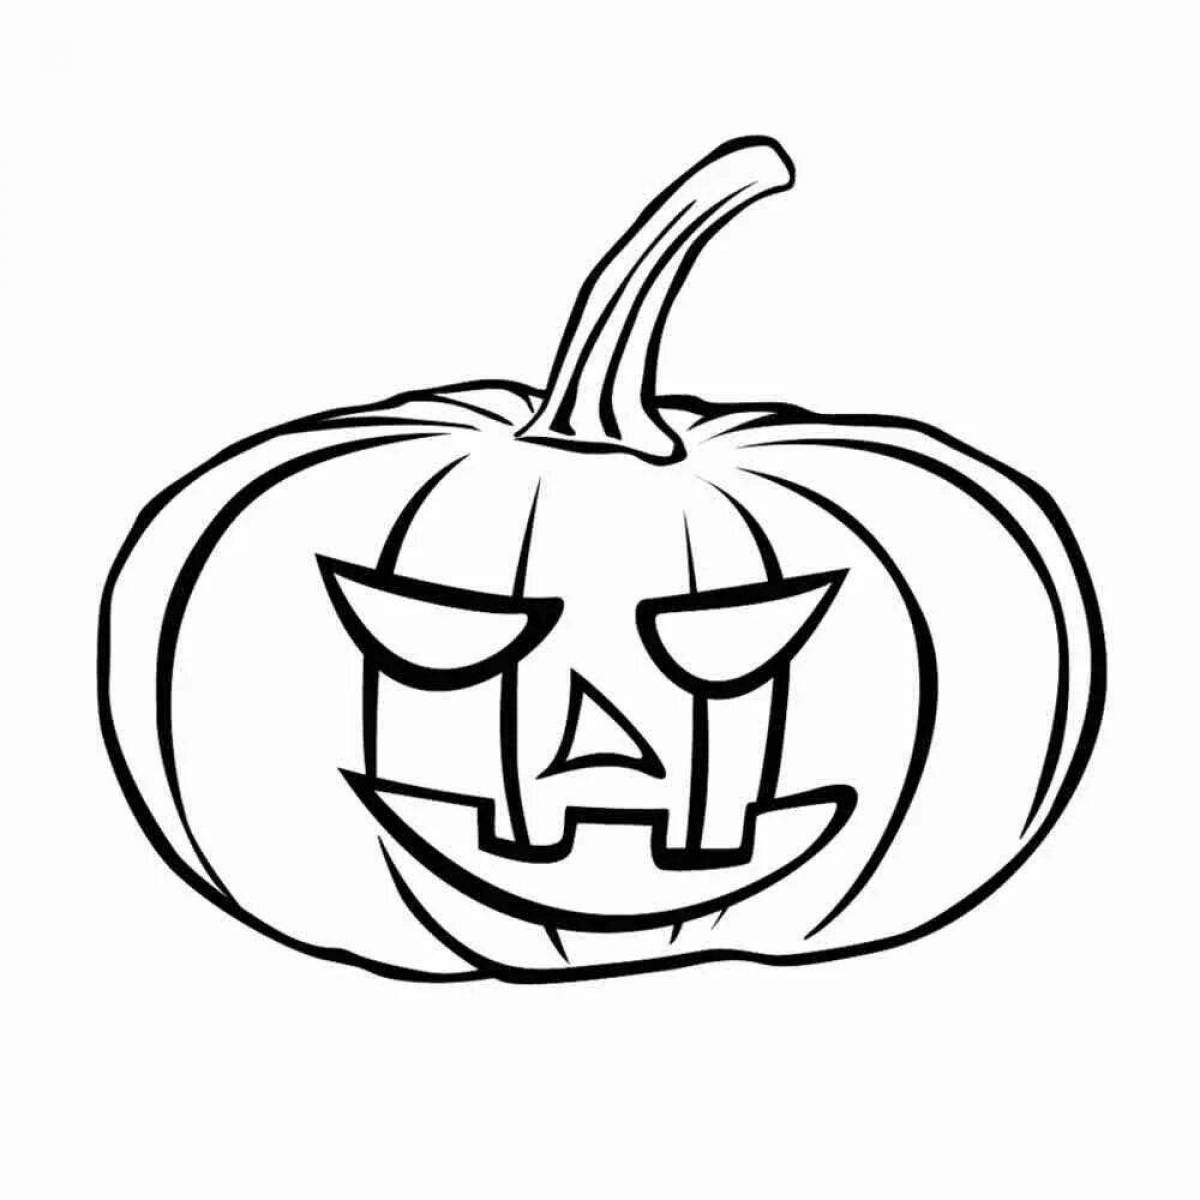 Spooky halloween pumpkin coloring page